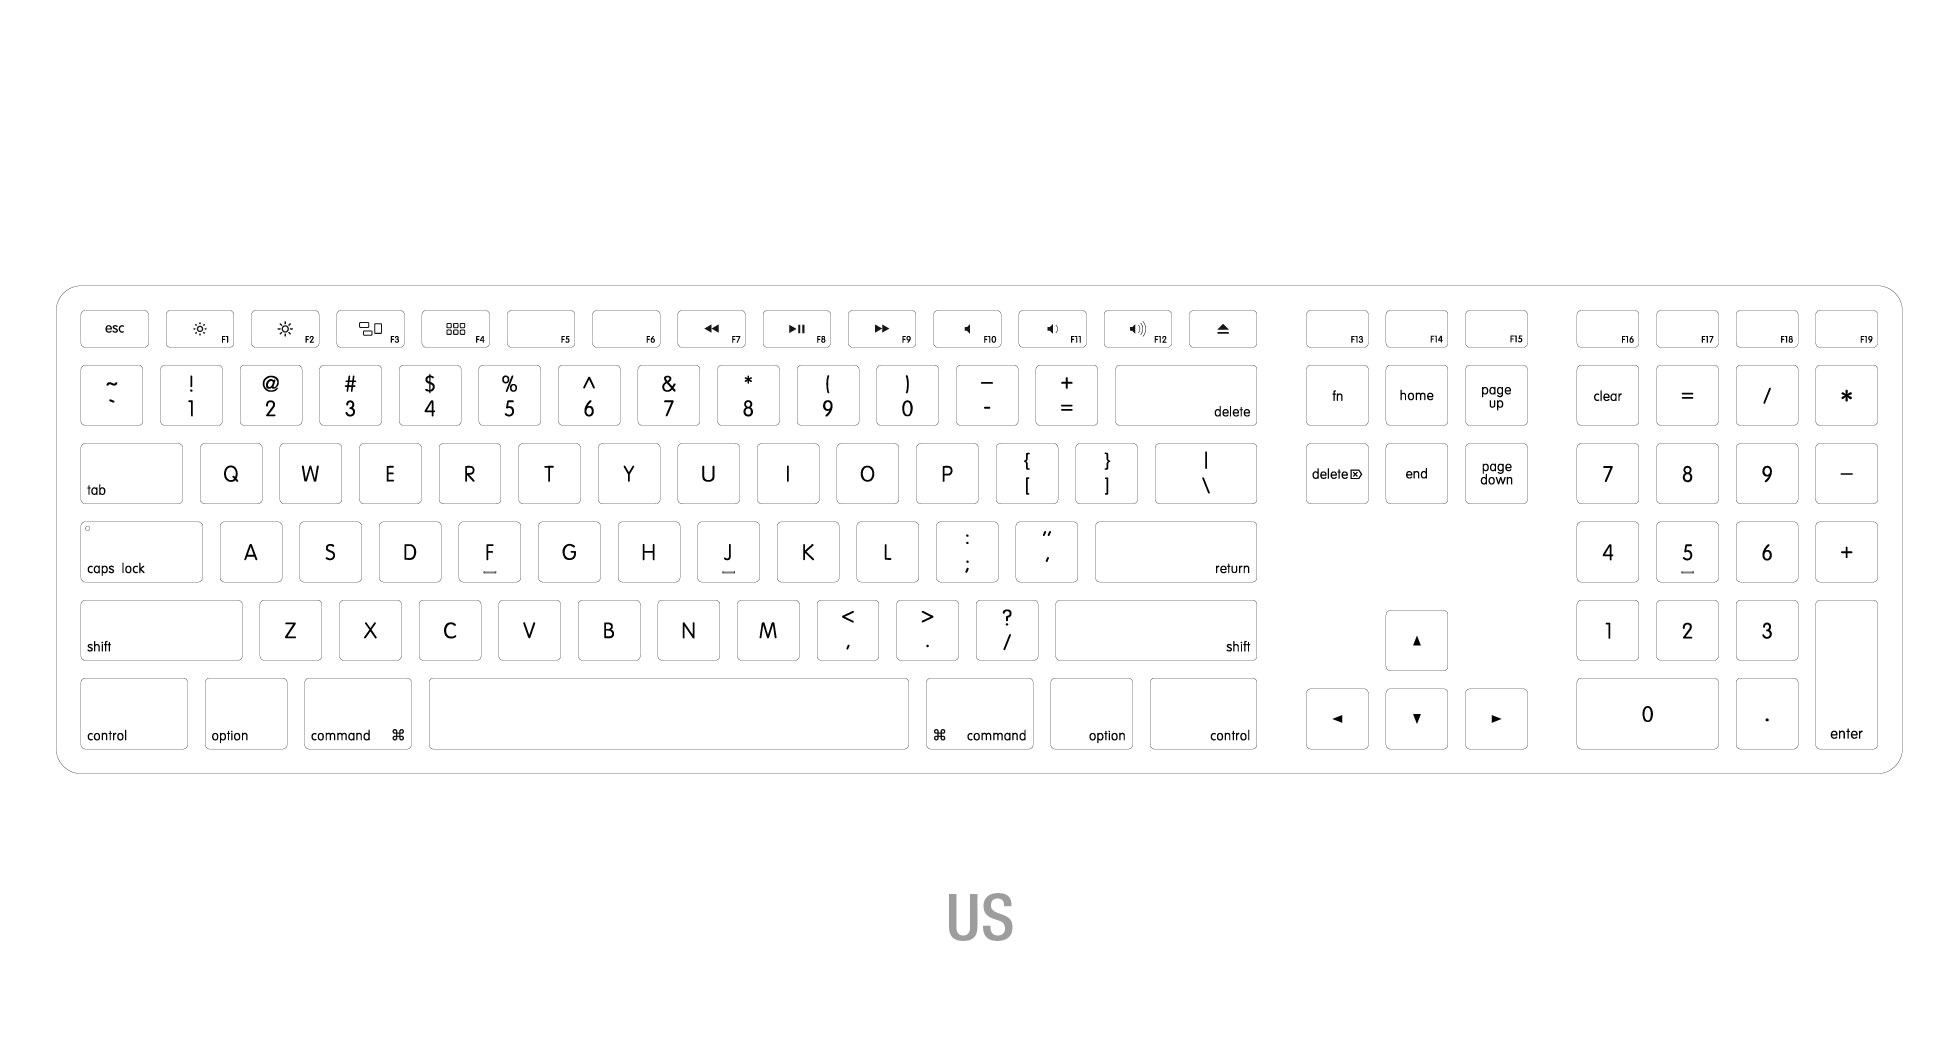 Matias Aluminium Erweiterte USB Tastatur US-Layout für Mac OS